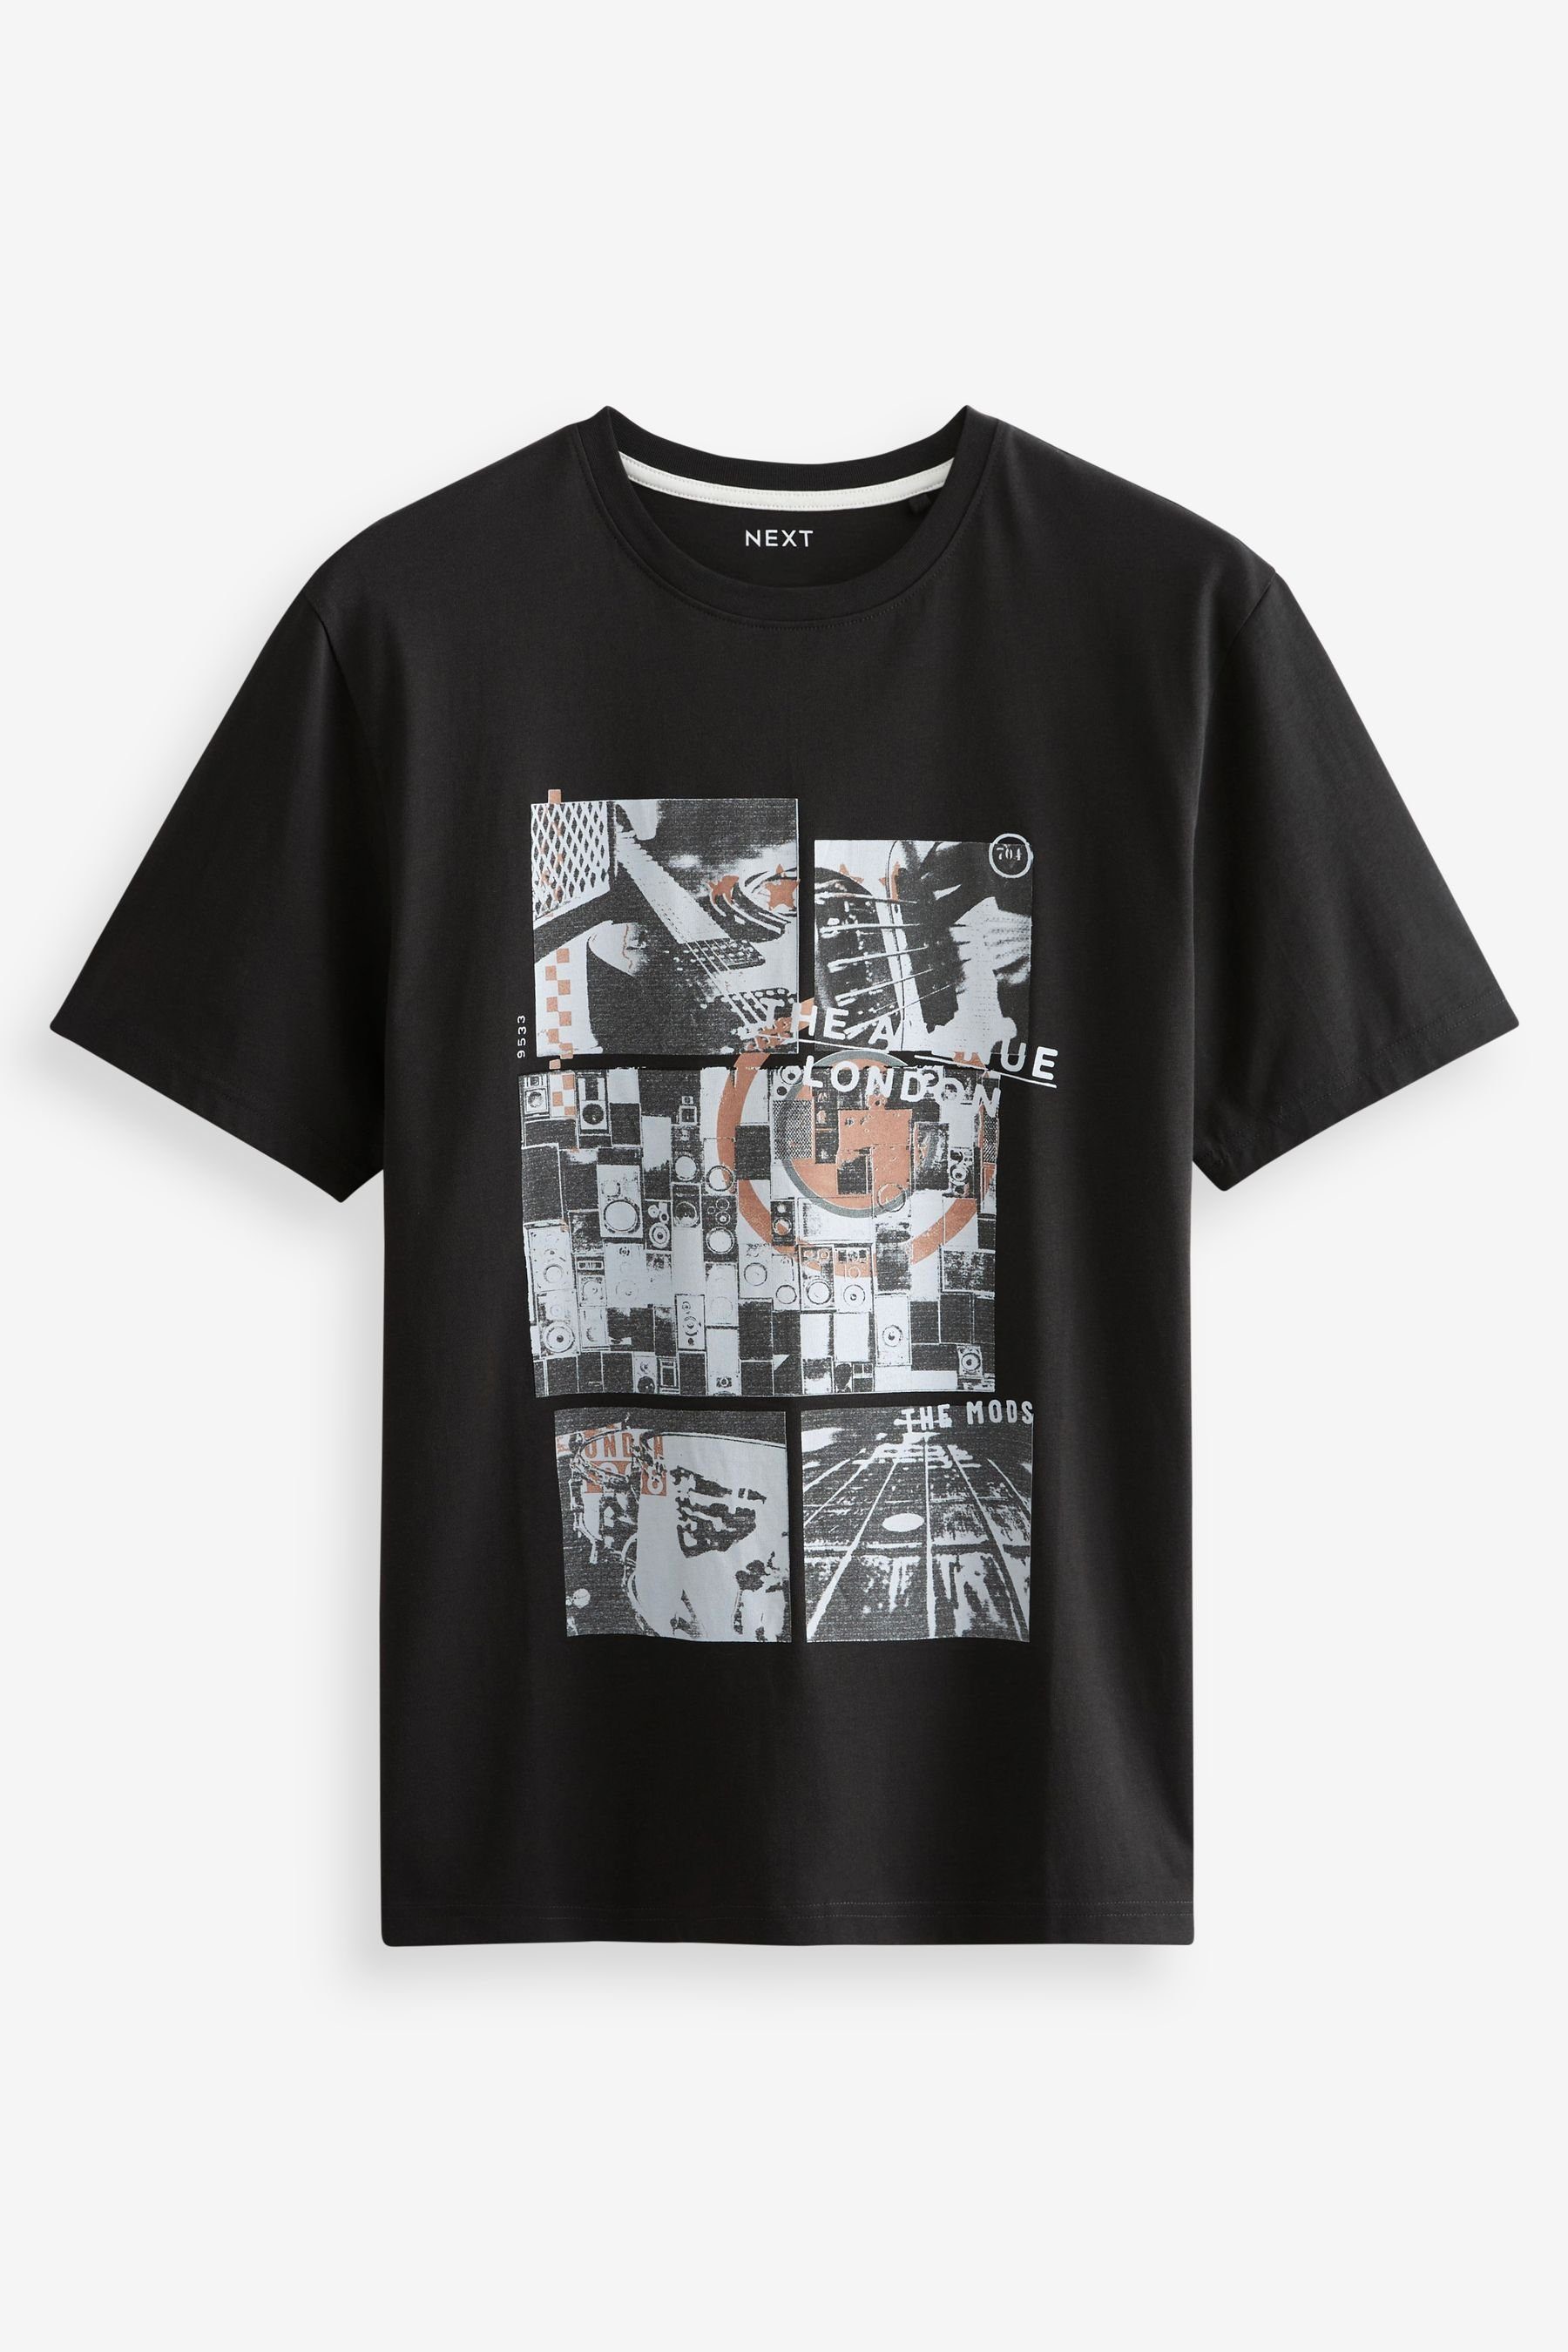 T-Shirt mit Next Print-Shirt (3-tlg) Mix Music Print